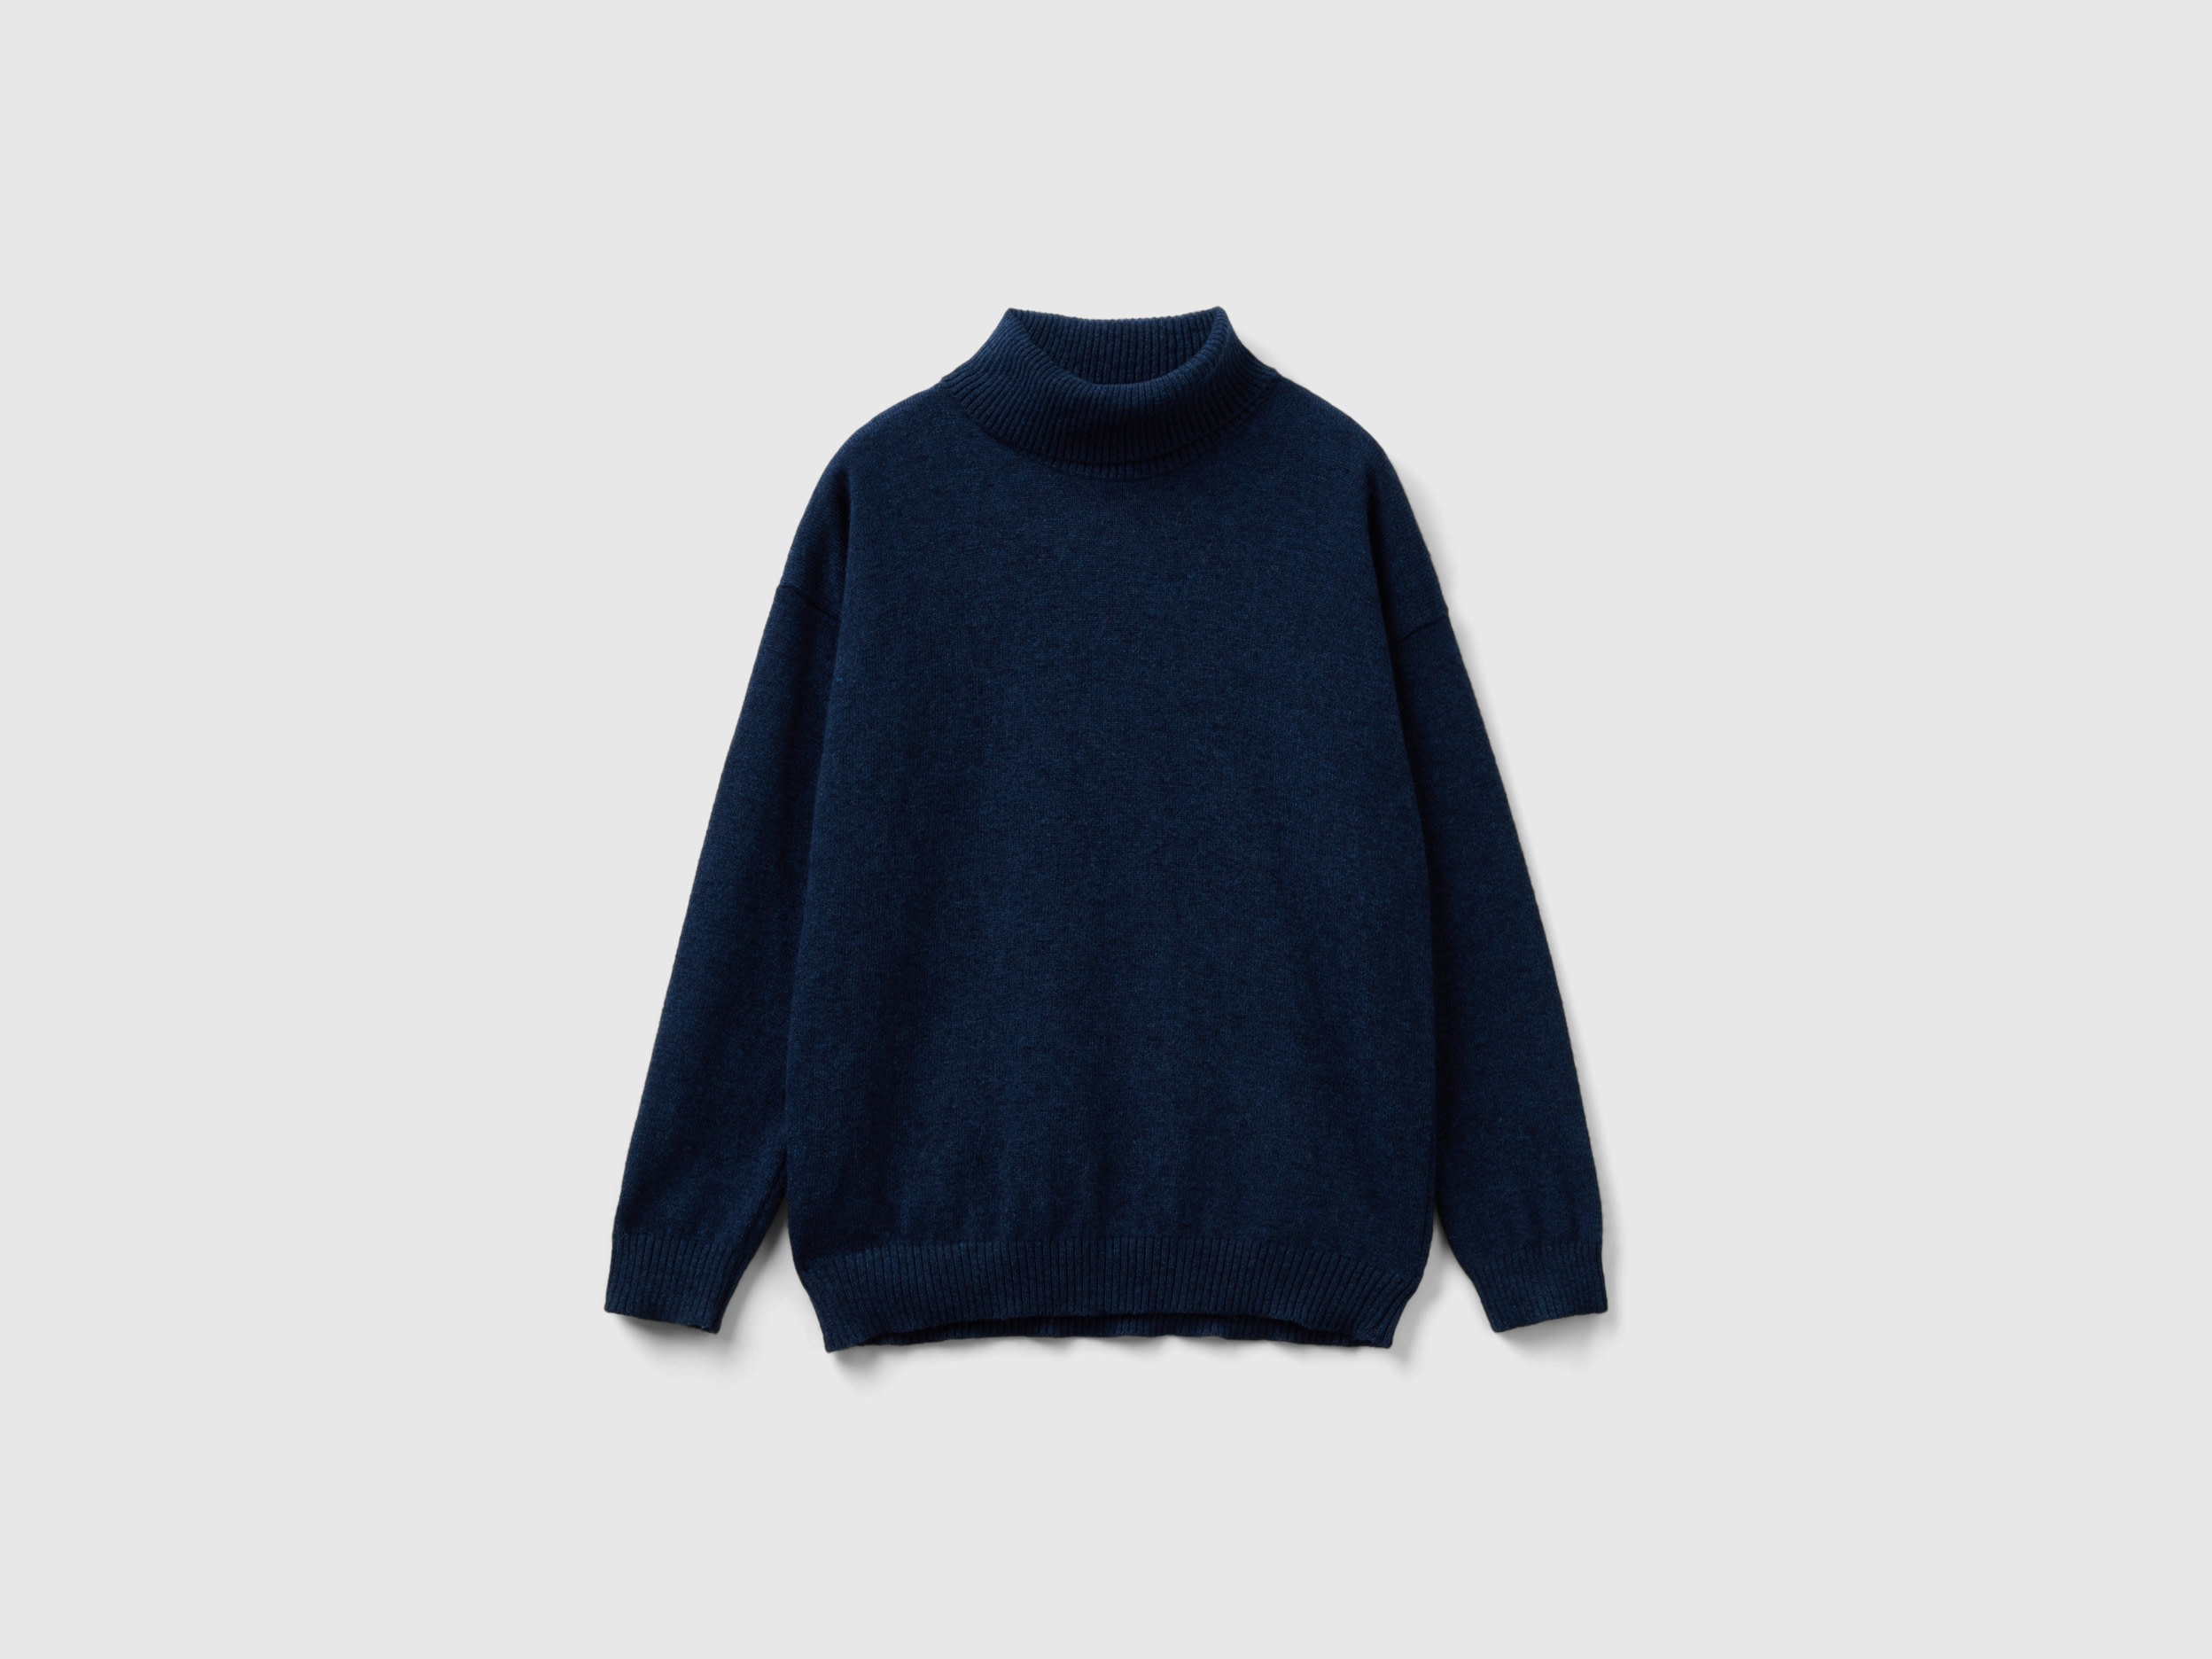 Benetton, Turtleneck Sweater In Cashmere And Wool Blend, size 3XL, Dark Blue, Kids